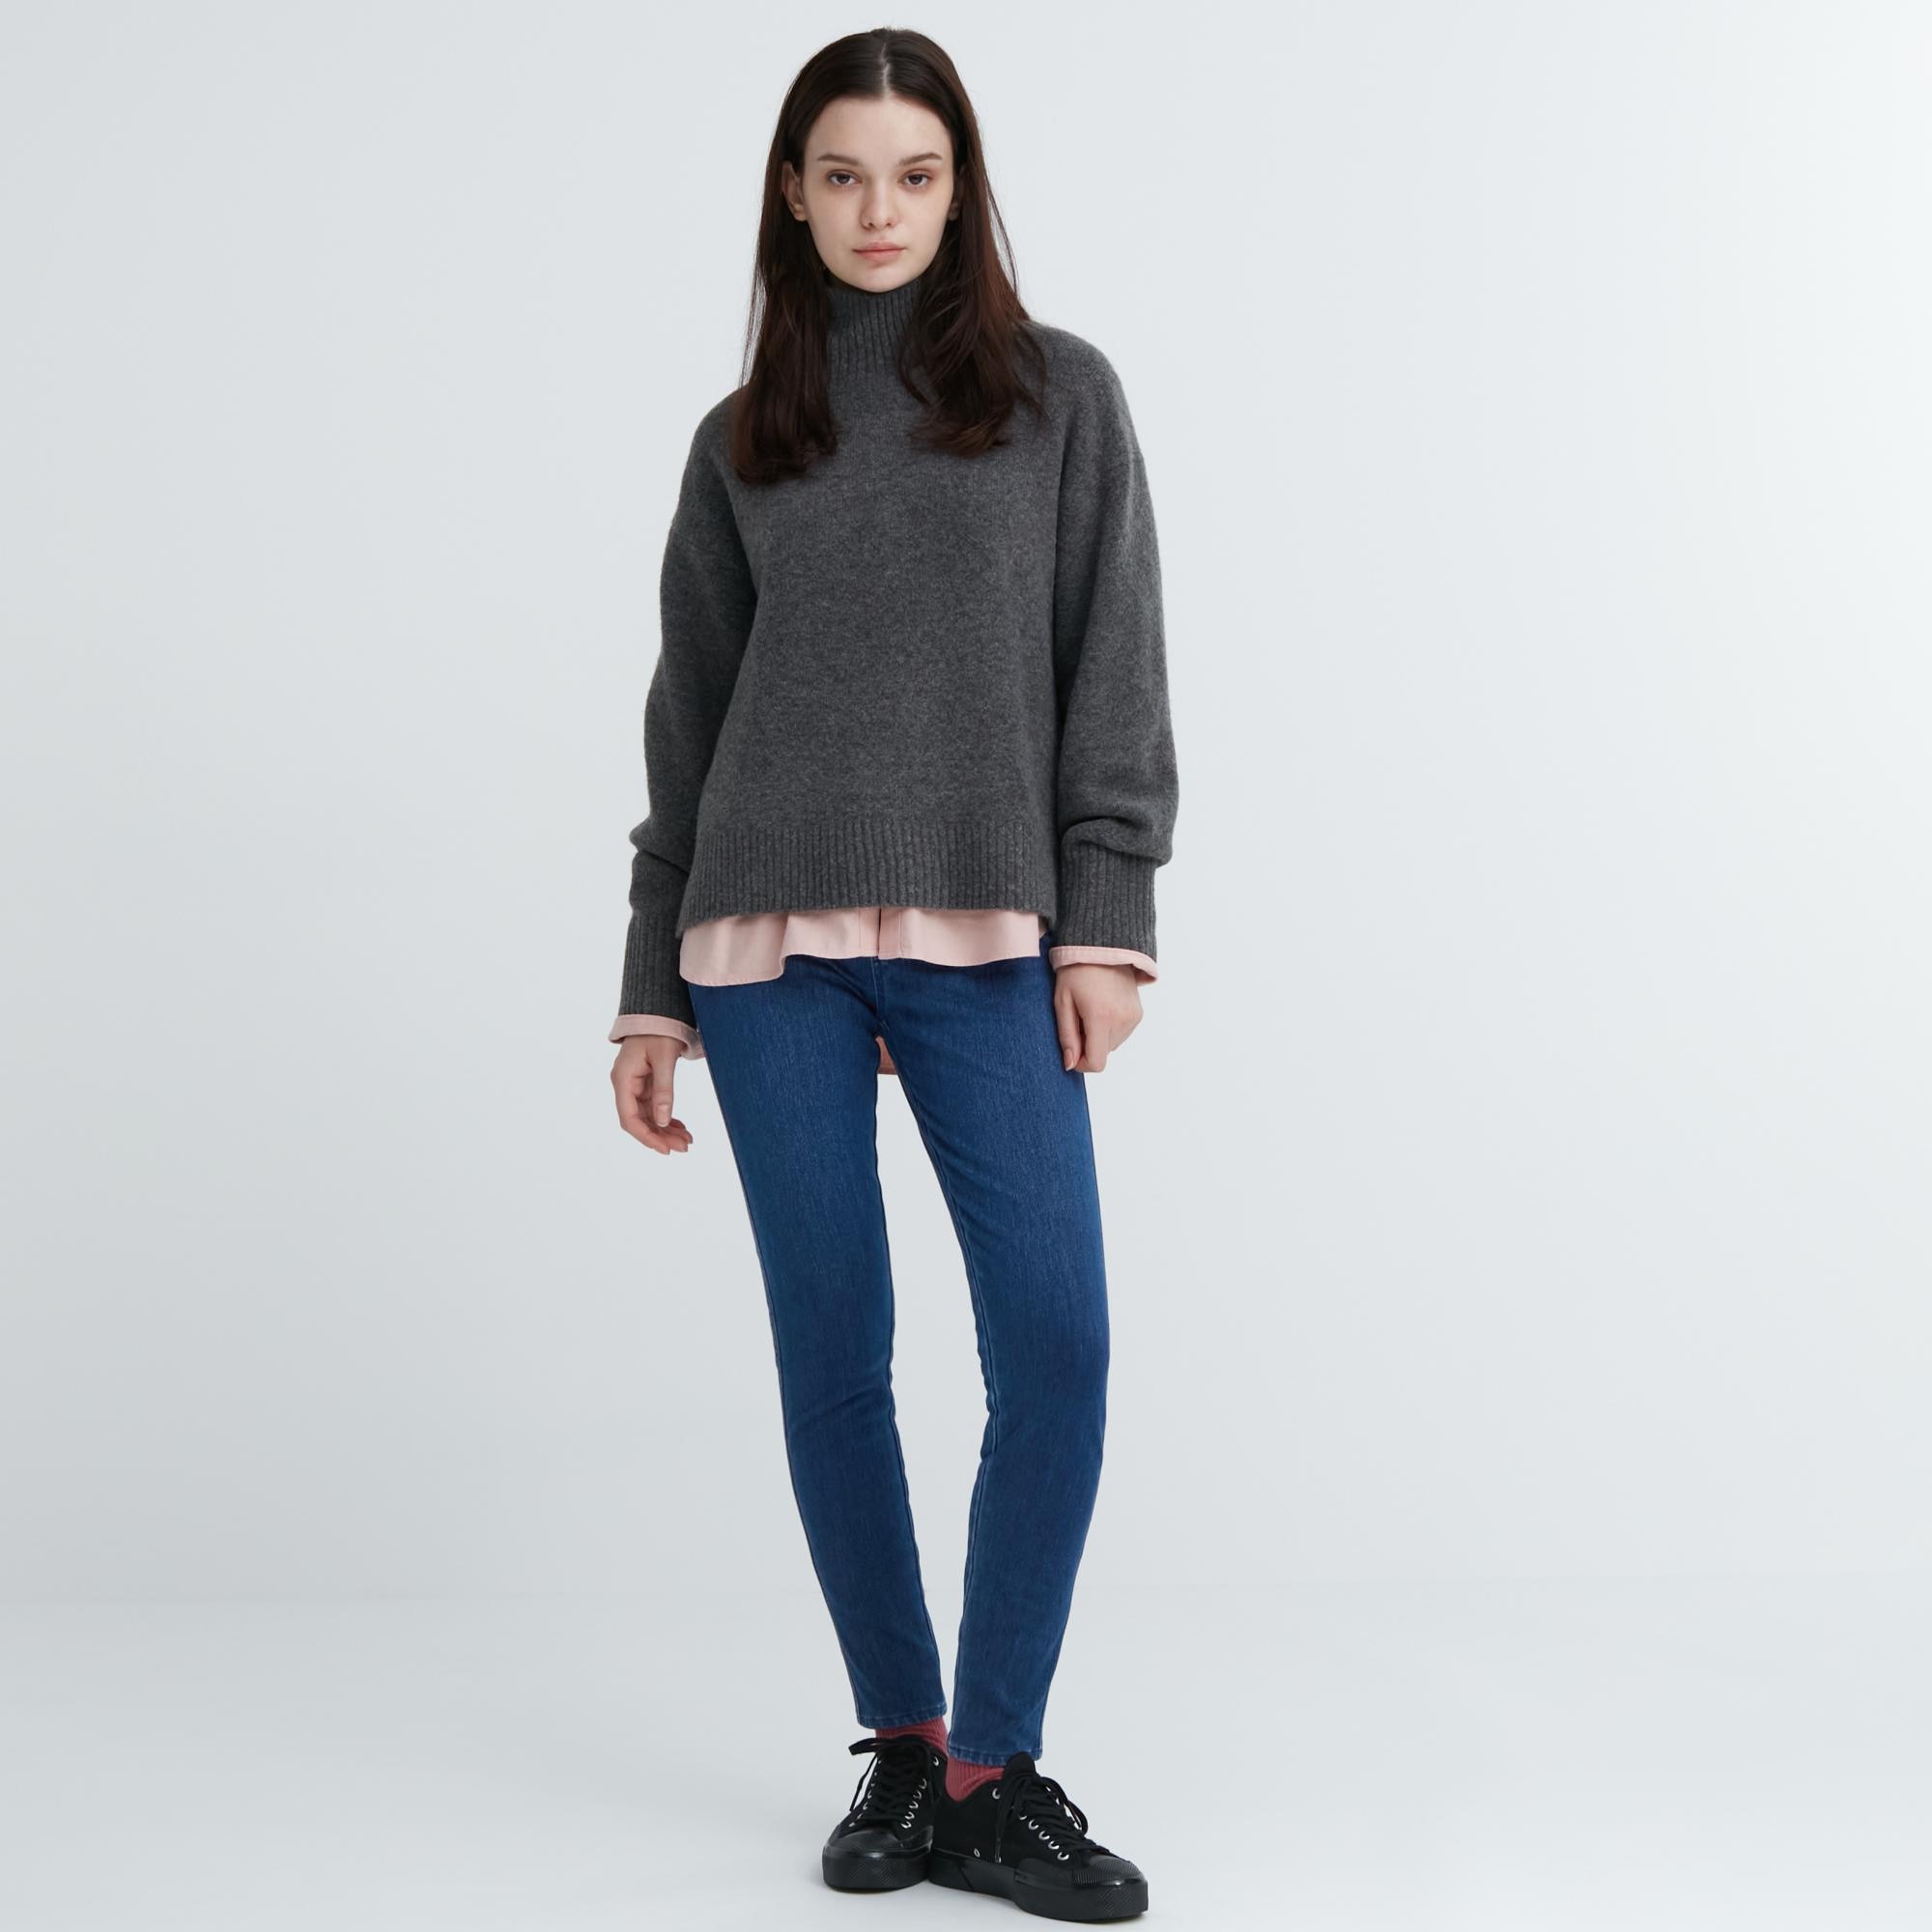 Uniqlo heattech dark grey velour stretch skinny jeans jeggings